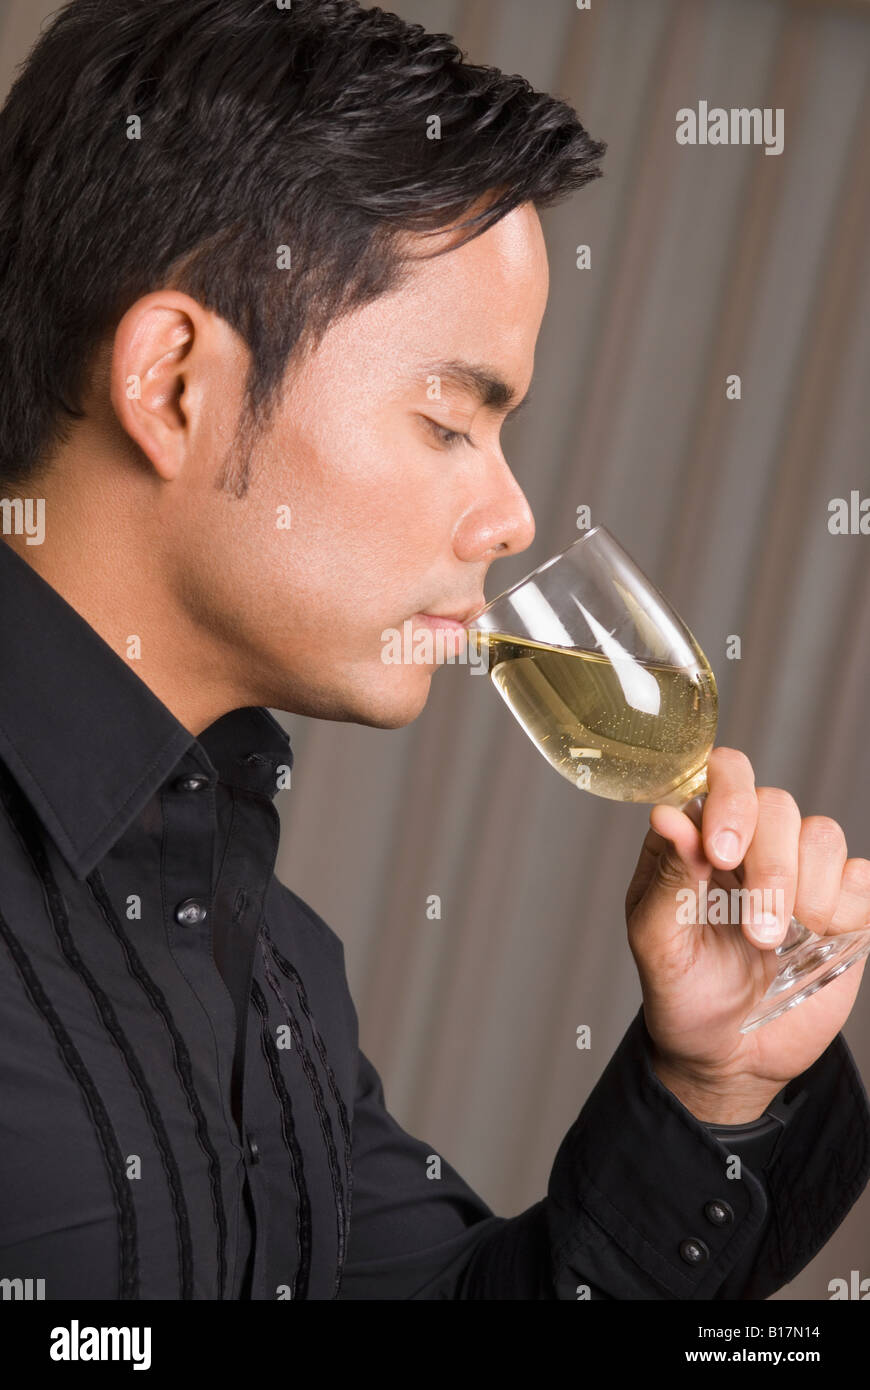 Hispanic man drinking wine Stock Photo